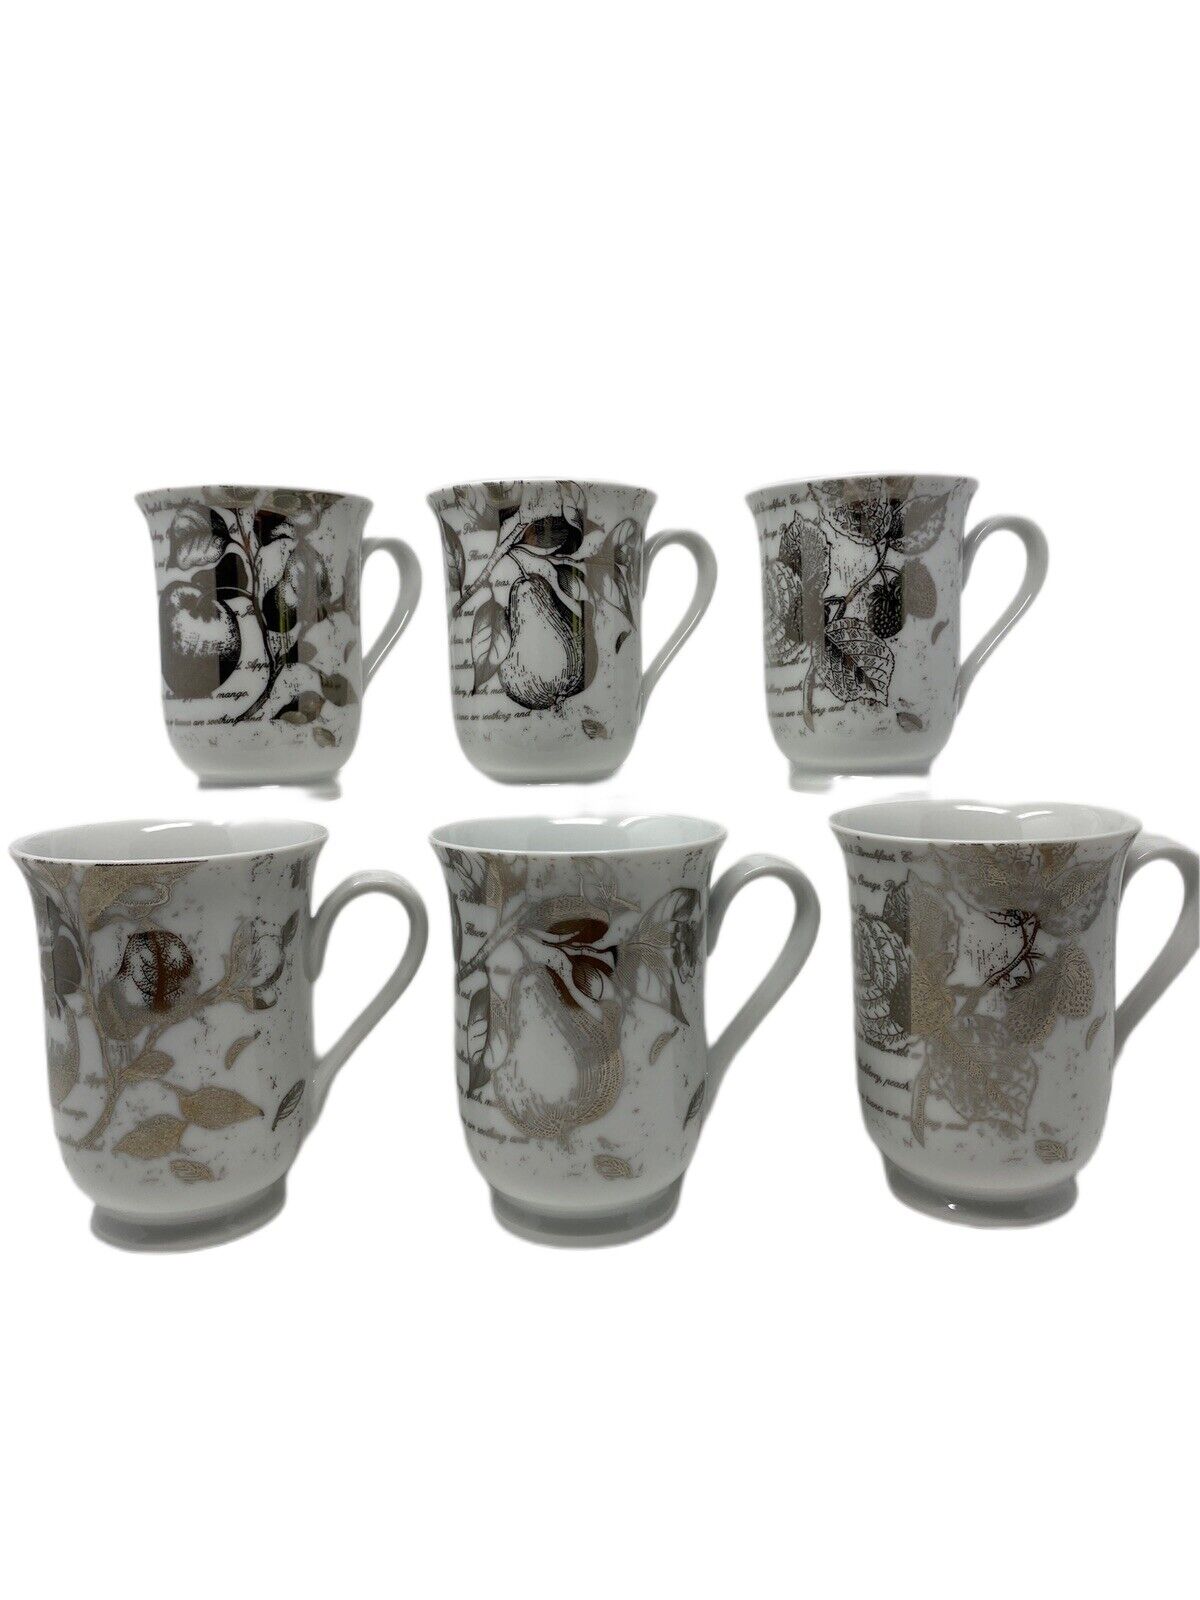 Pottery Barn Botanical Silver Leaf Berries/Fruit/Script on White Porcelain Mugs